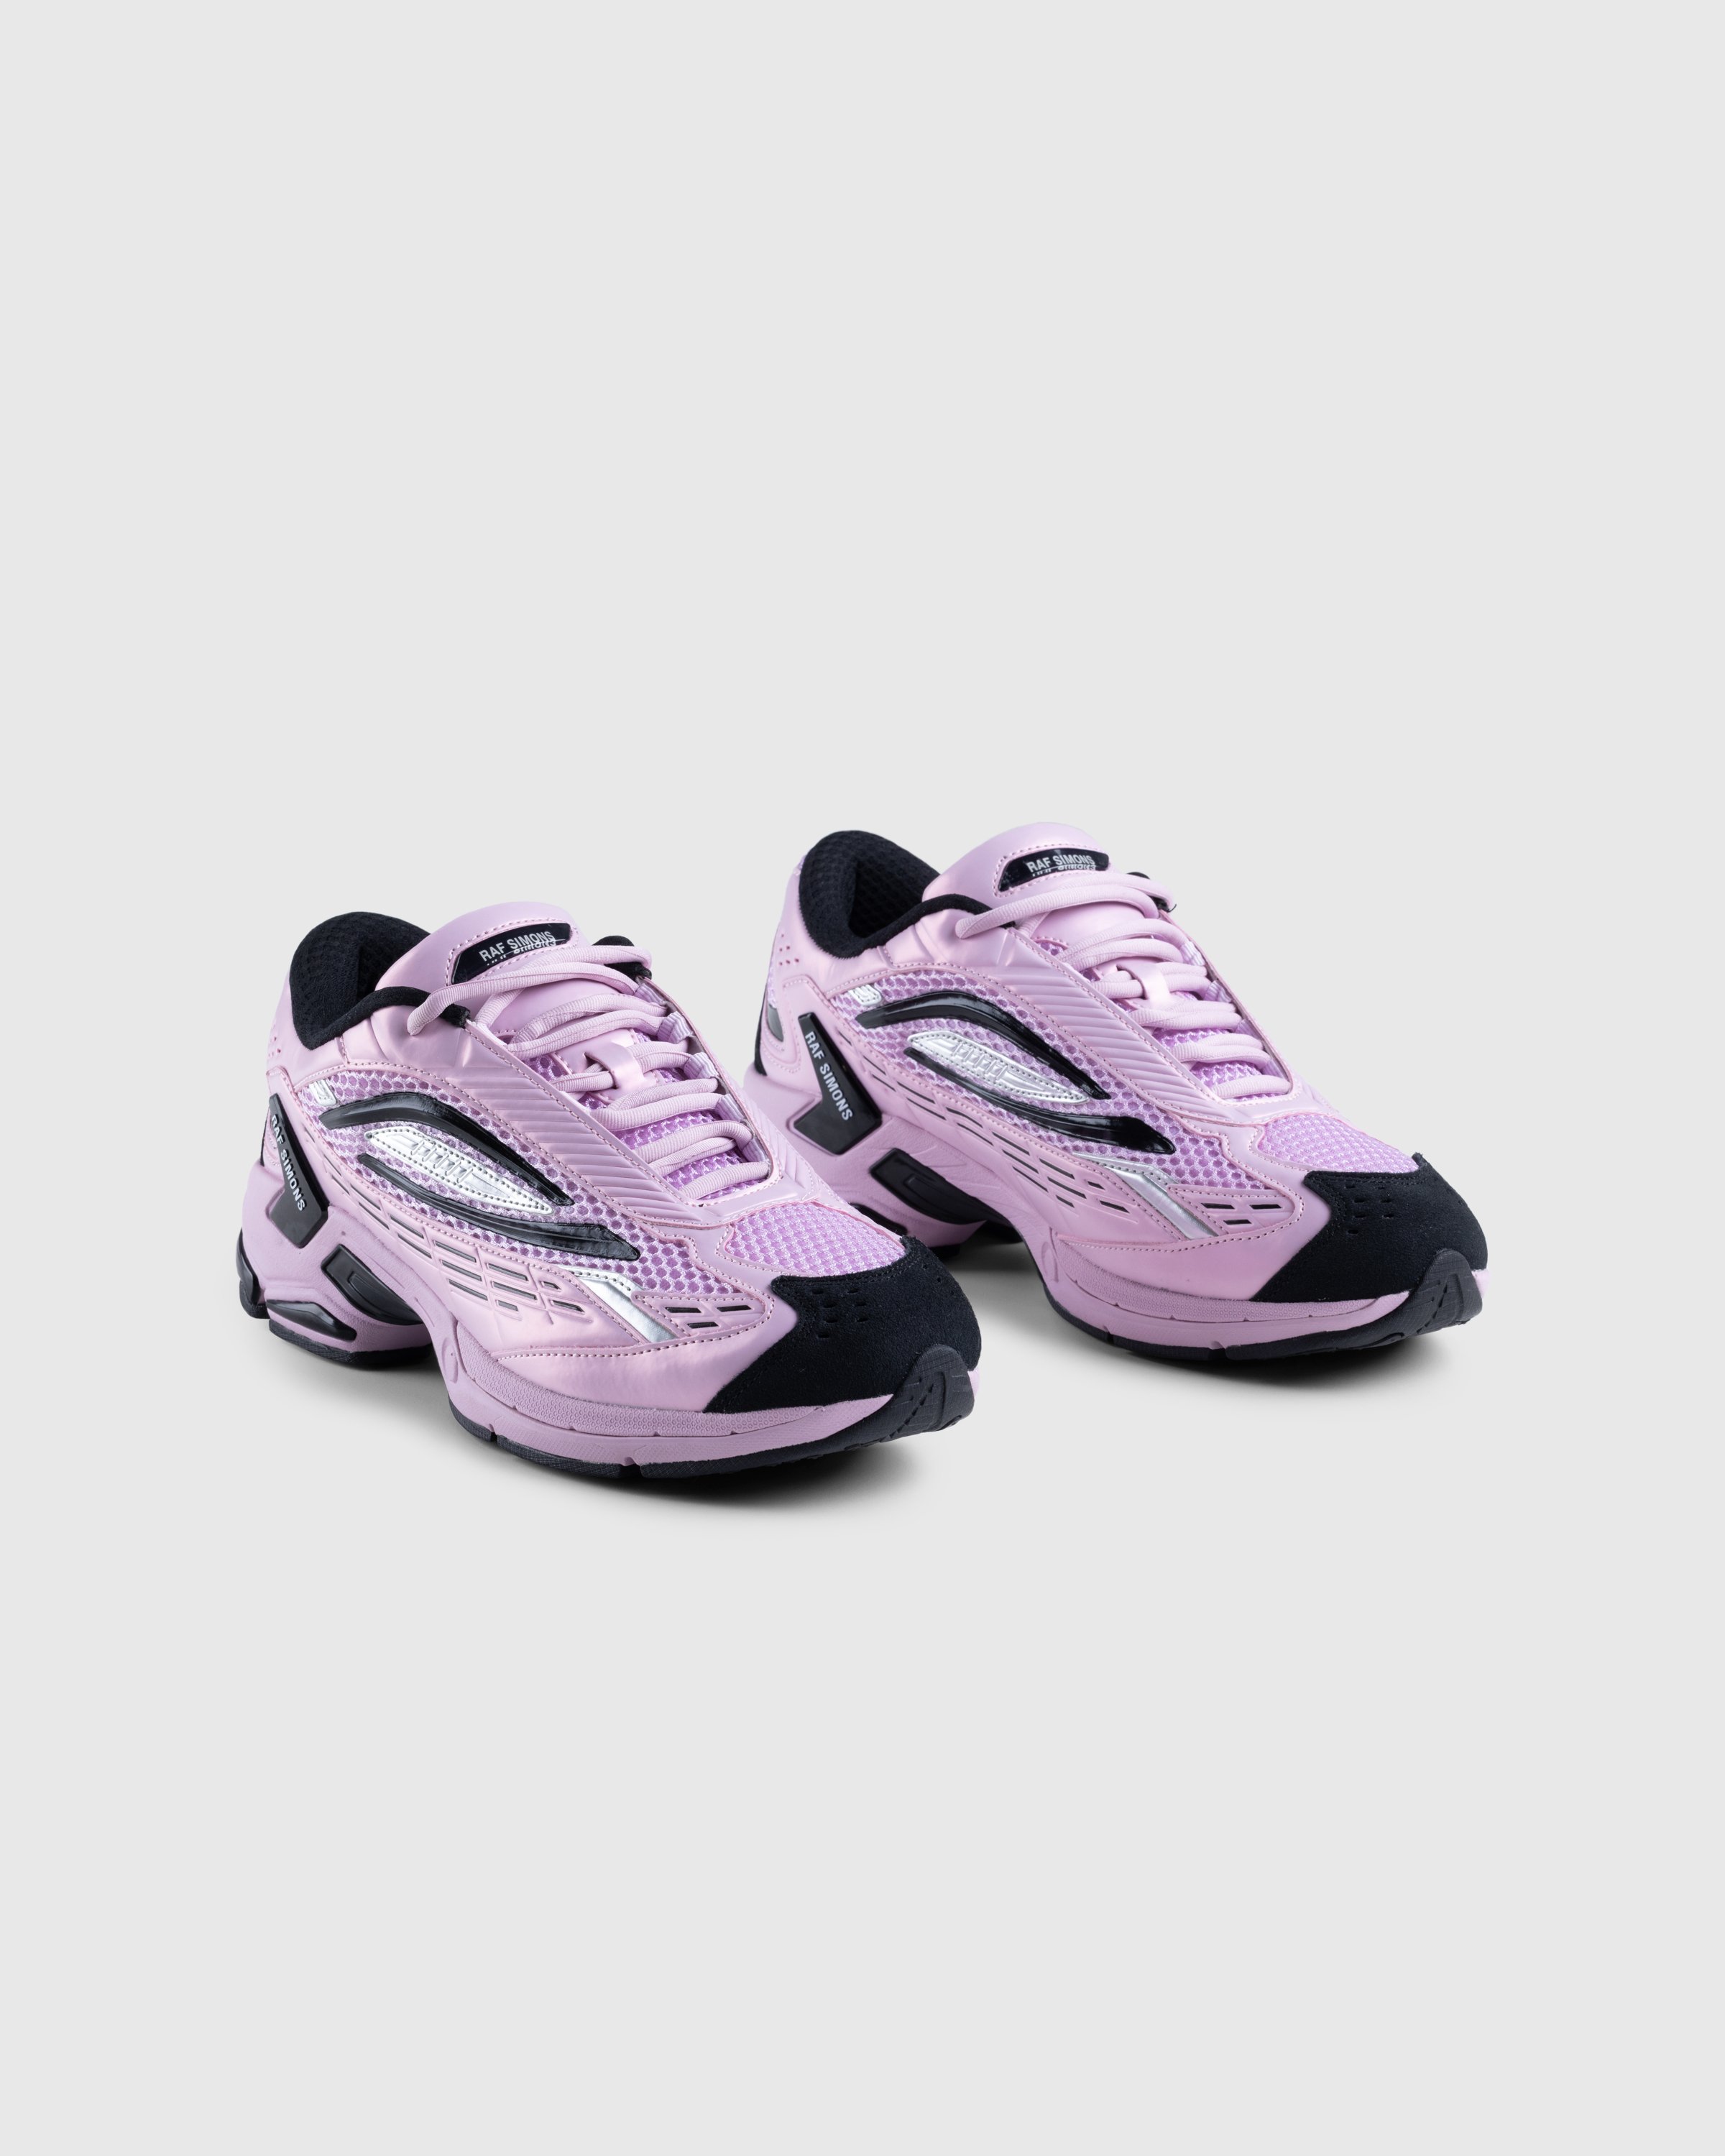 Raf Simons - ULTRASCEPTRE 0044 - Footwear - Pink - Image 3